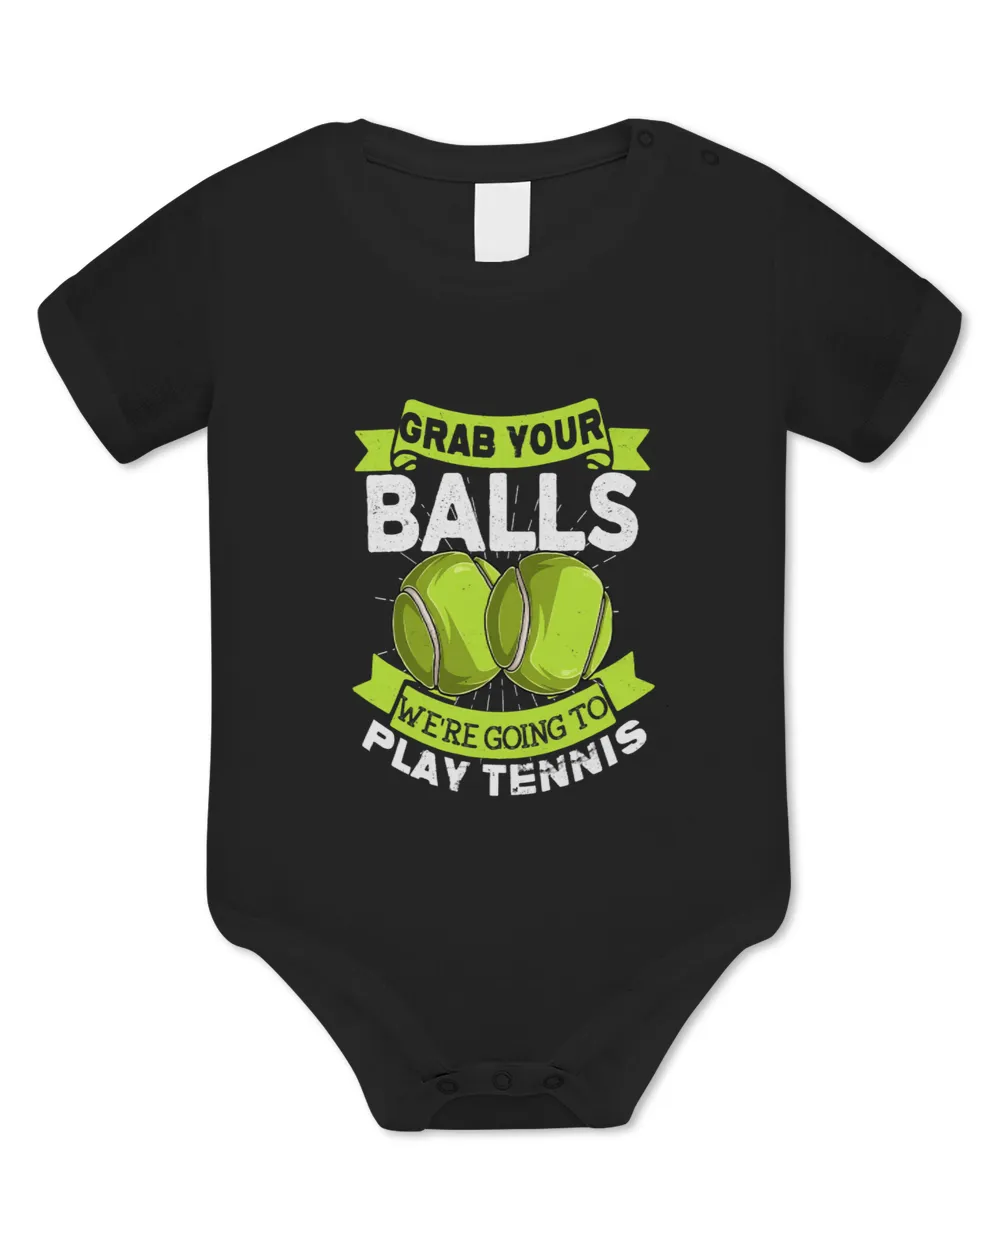 Tennis Ball Grab Your Balls Funny Tennis Player 2Tennis Coach Gift